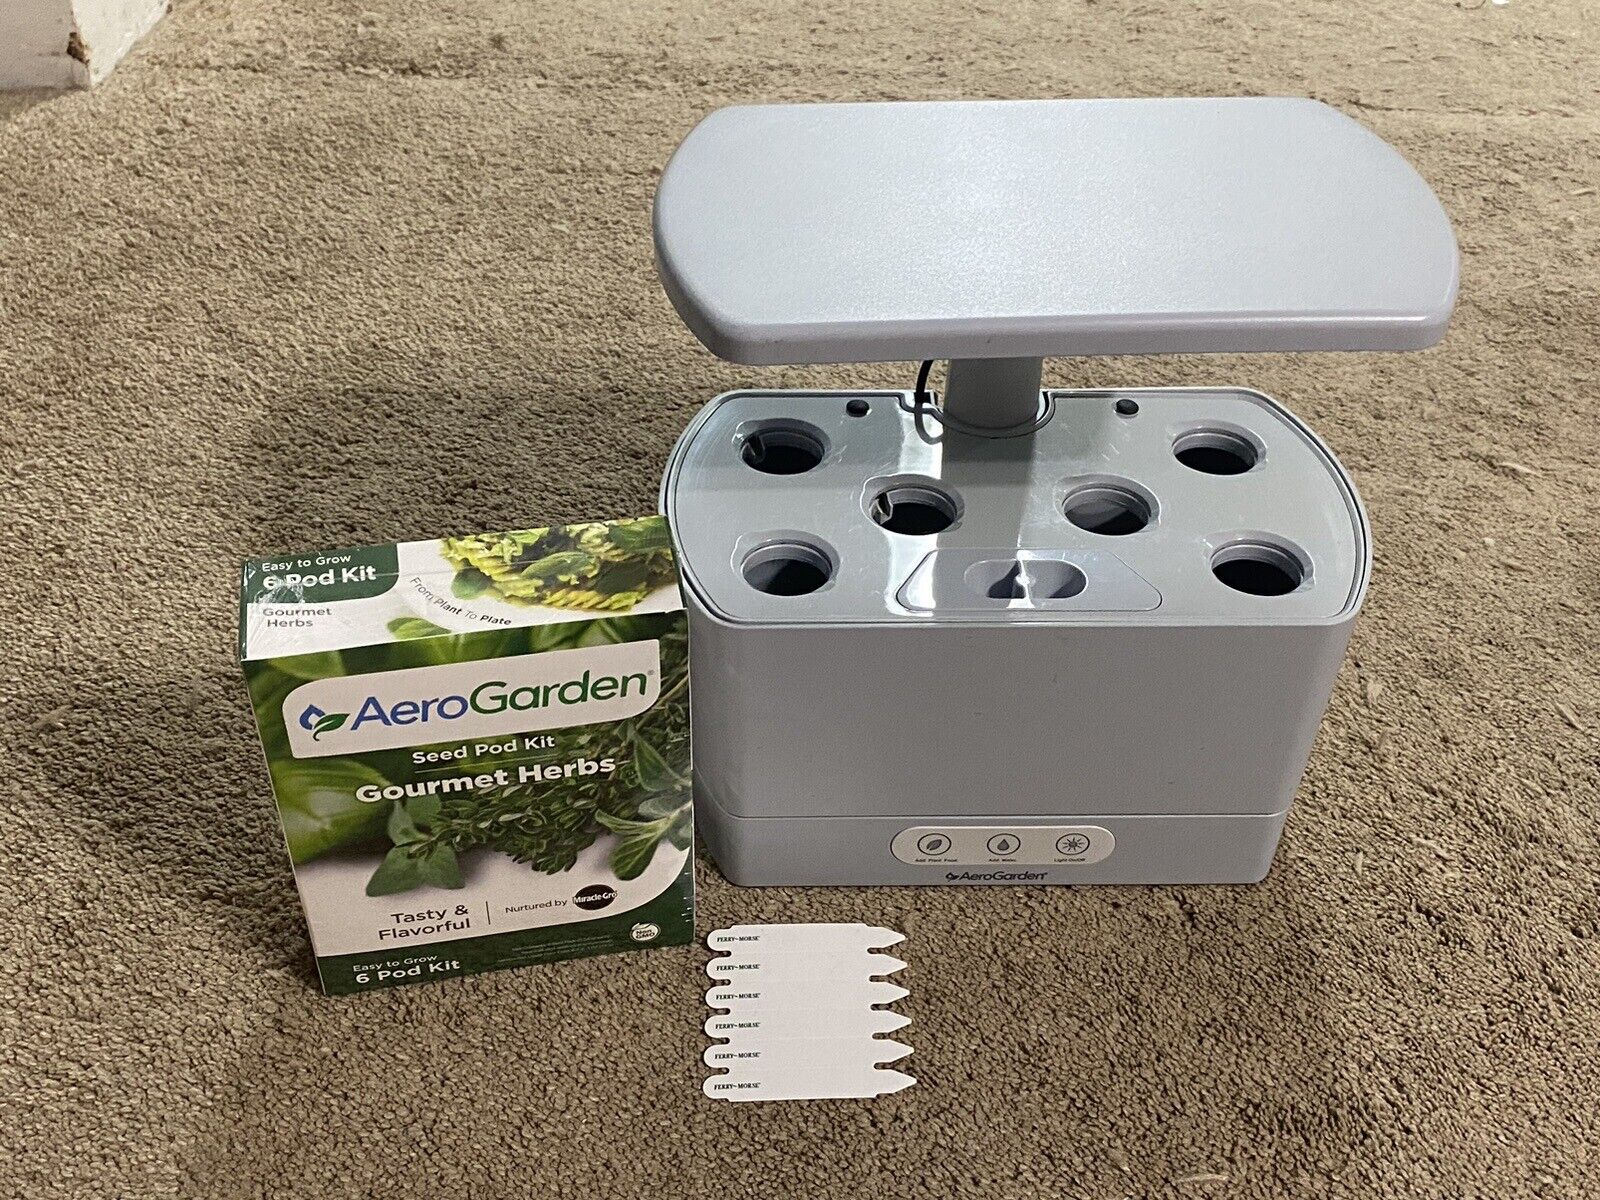 AeroGarden Harvest Model 100690-CGY Home Garden System W/ Seed Pot Kit